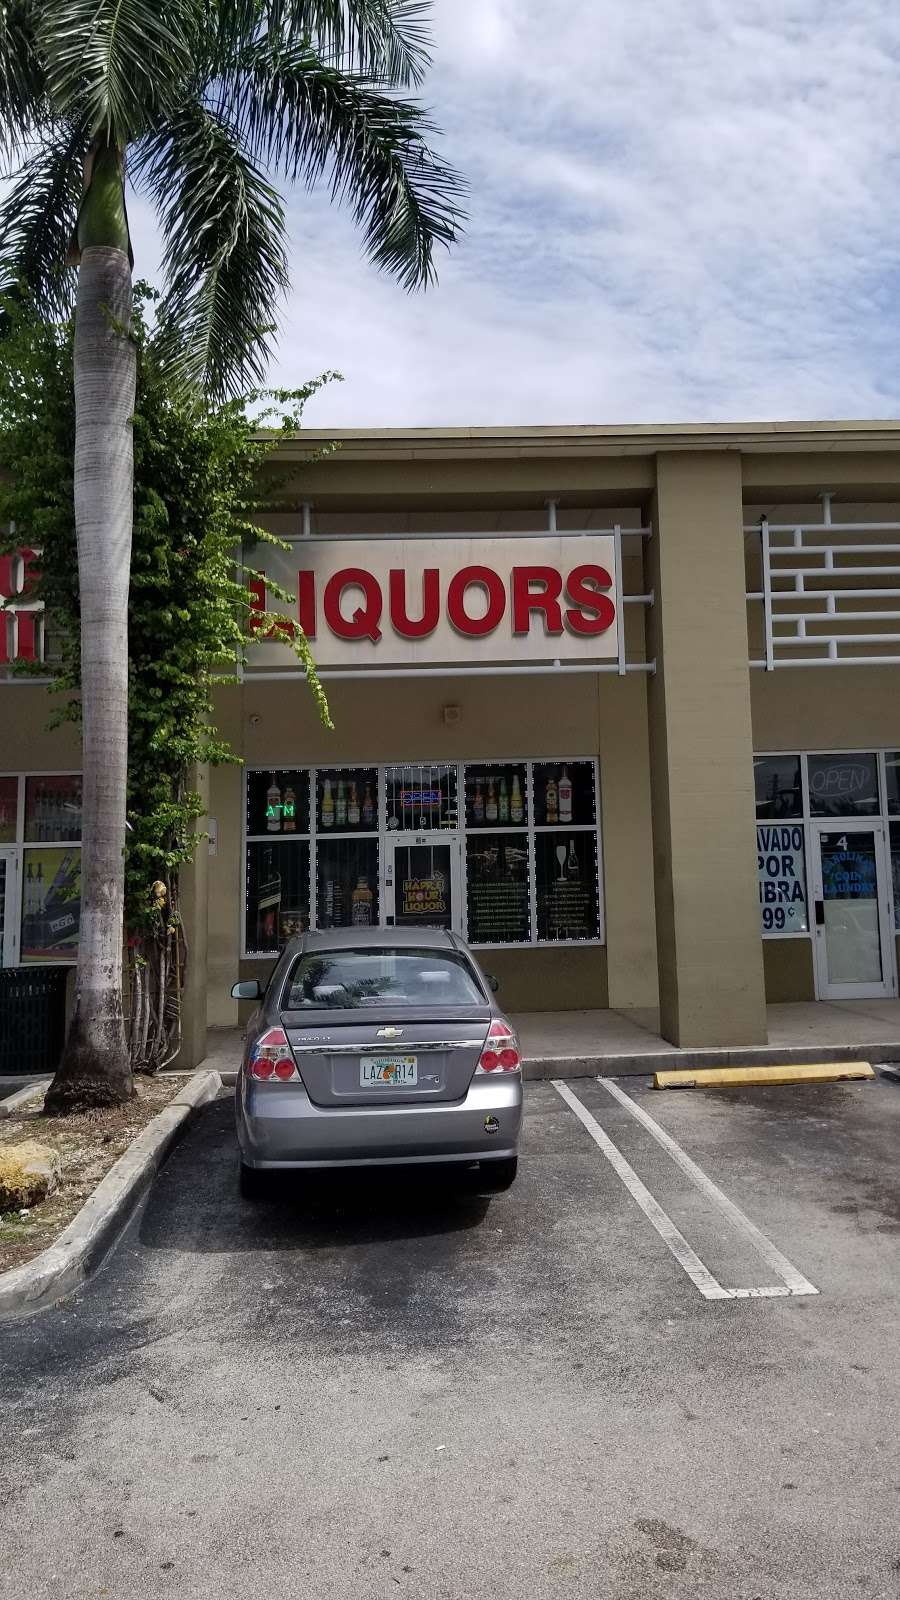 Tillos Liquor | 2851 W 68th St #5, Hialeah, FL 33018